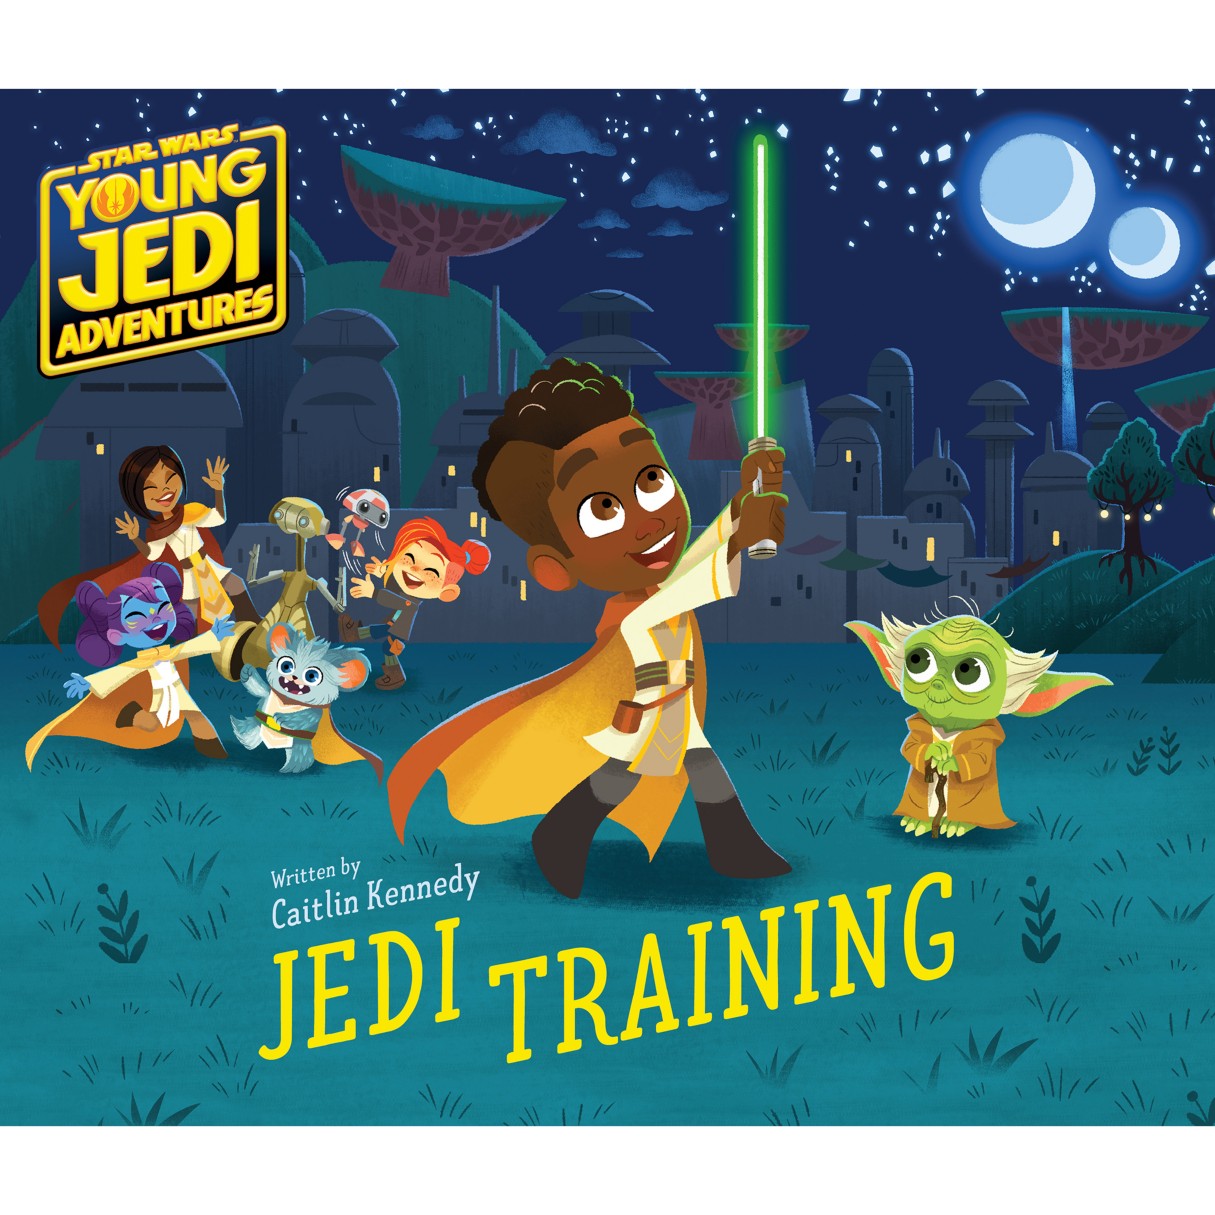 Star Wars Young Jedi Adventures: Jedi Training Book